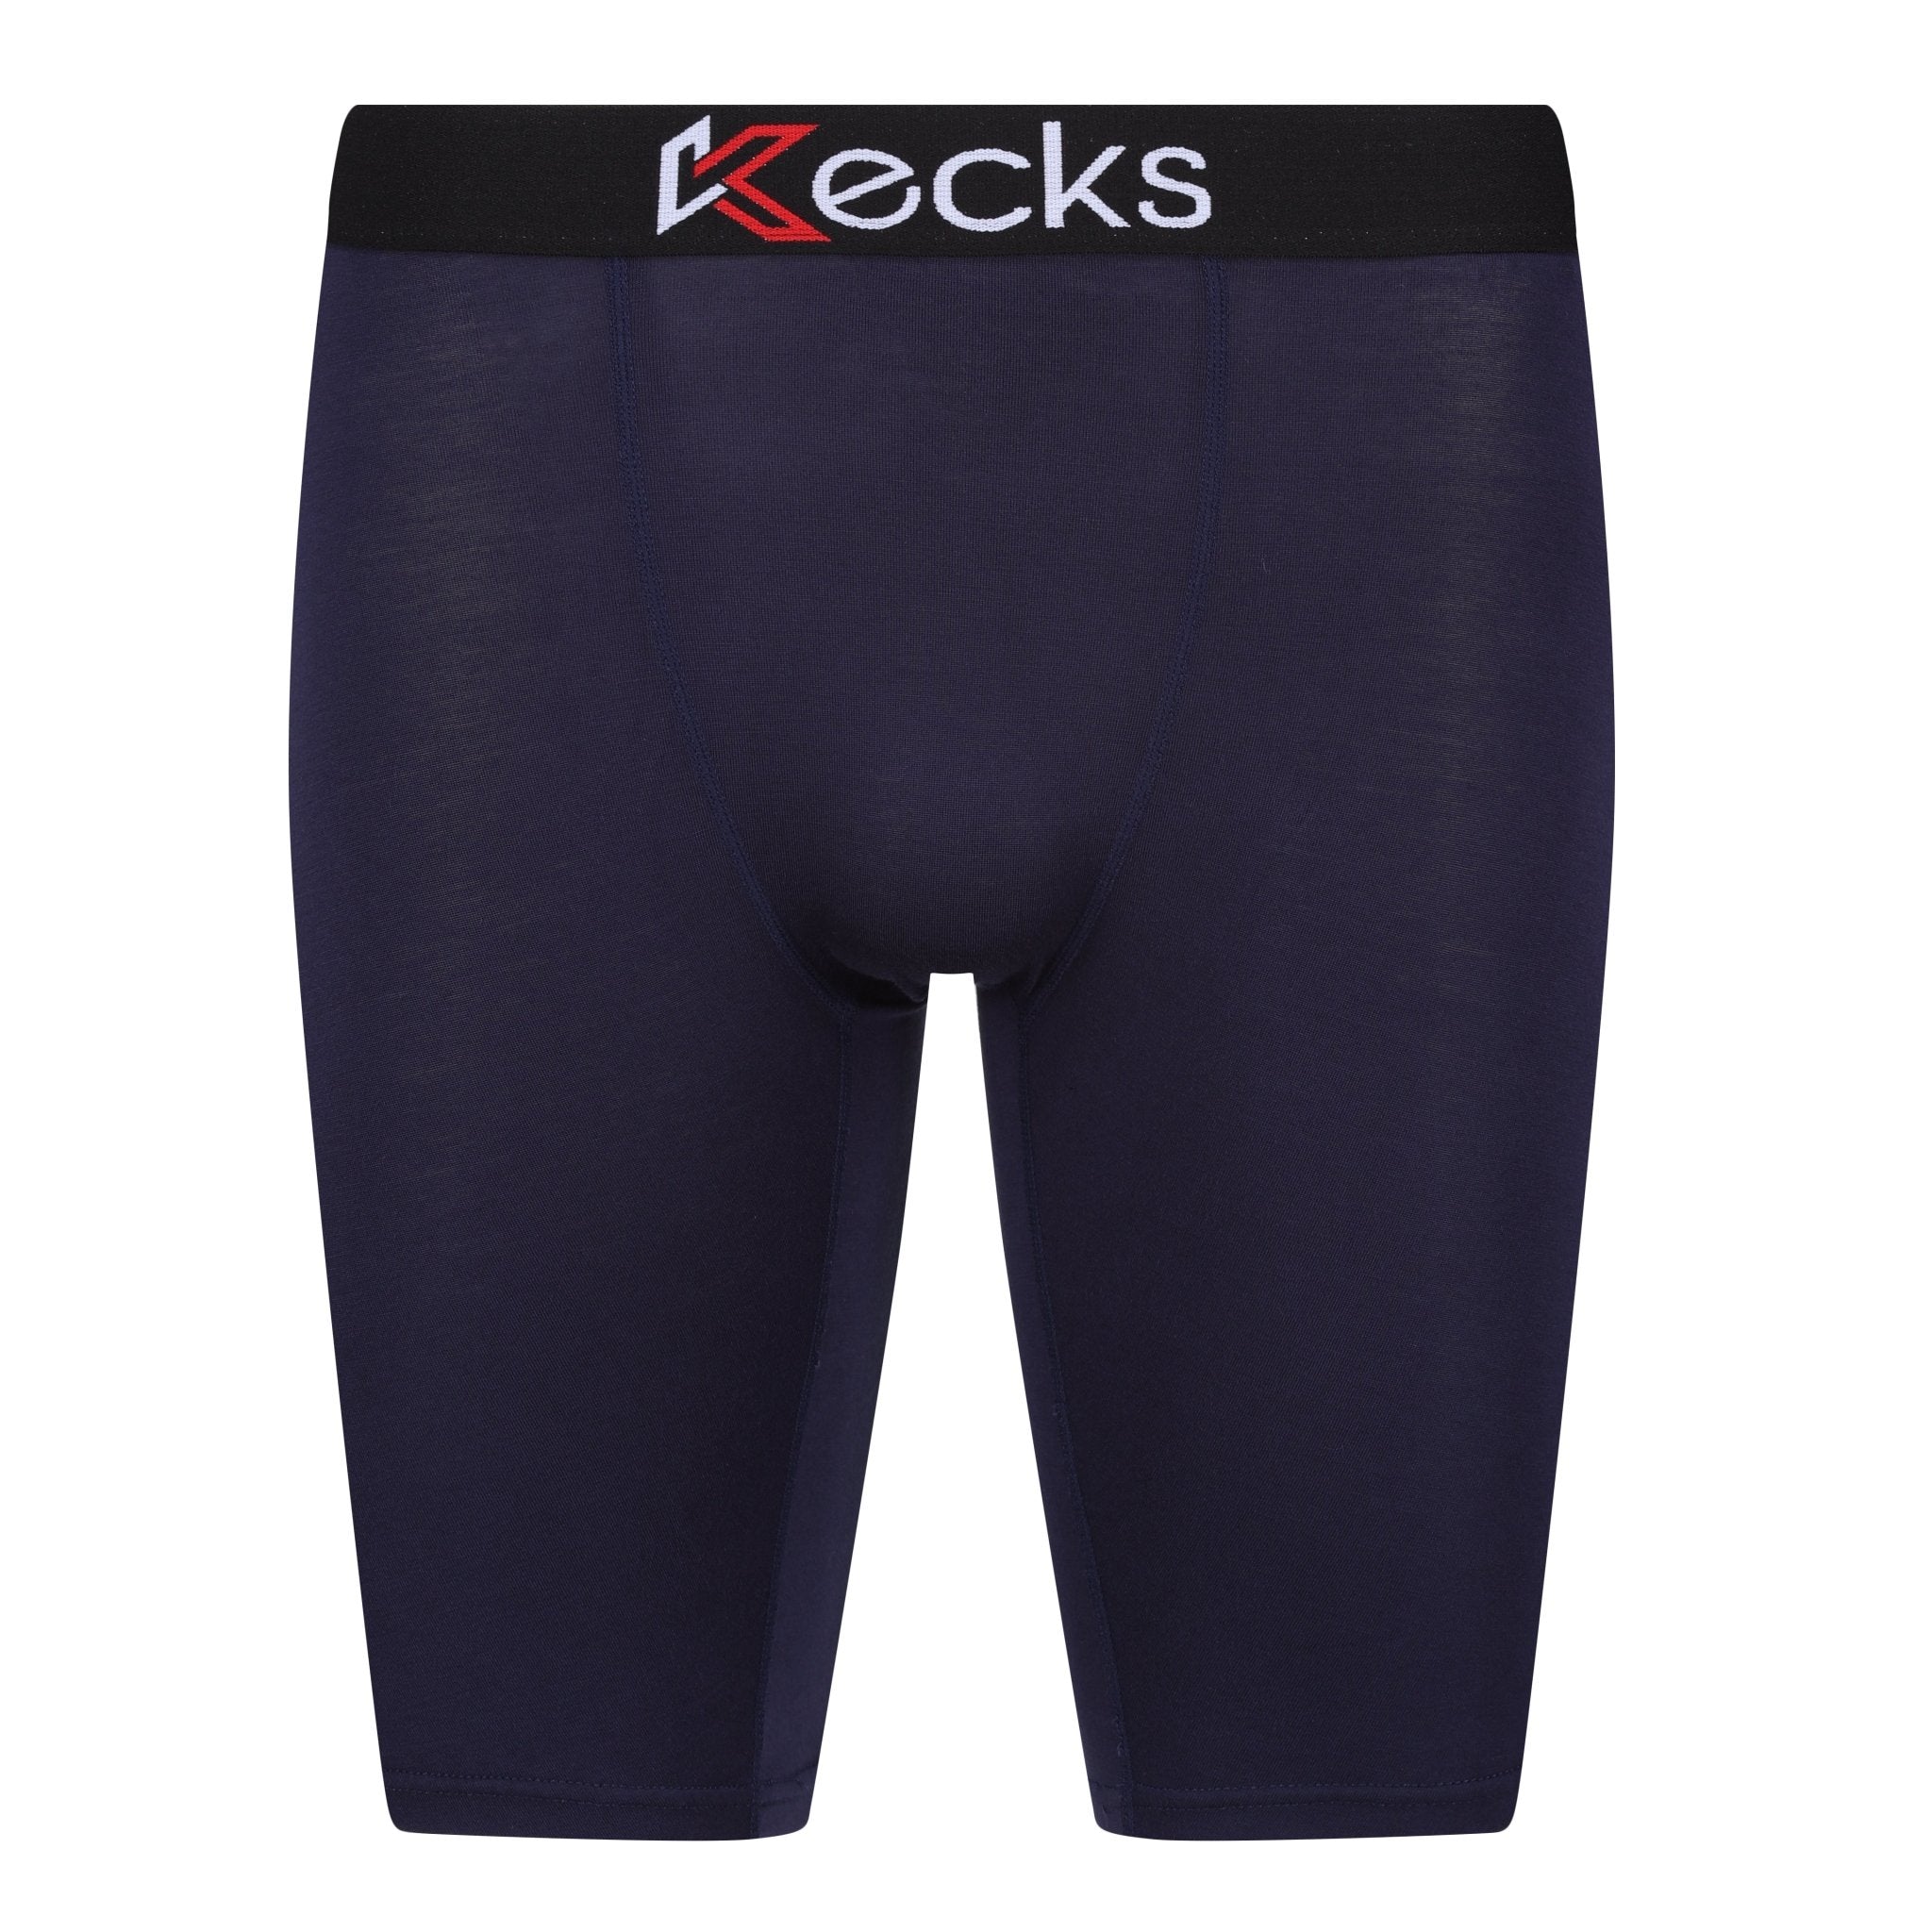 3 Pack Navy Boxer Shorts - Kecks